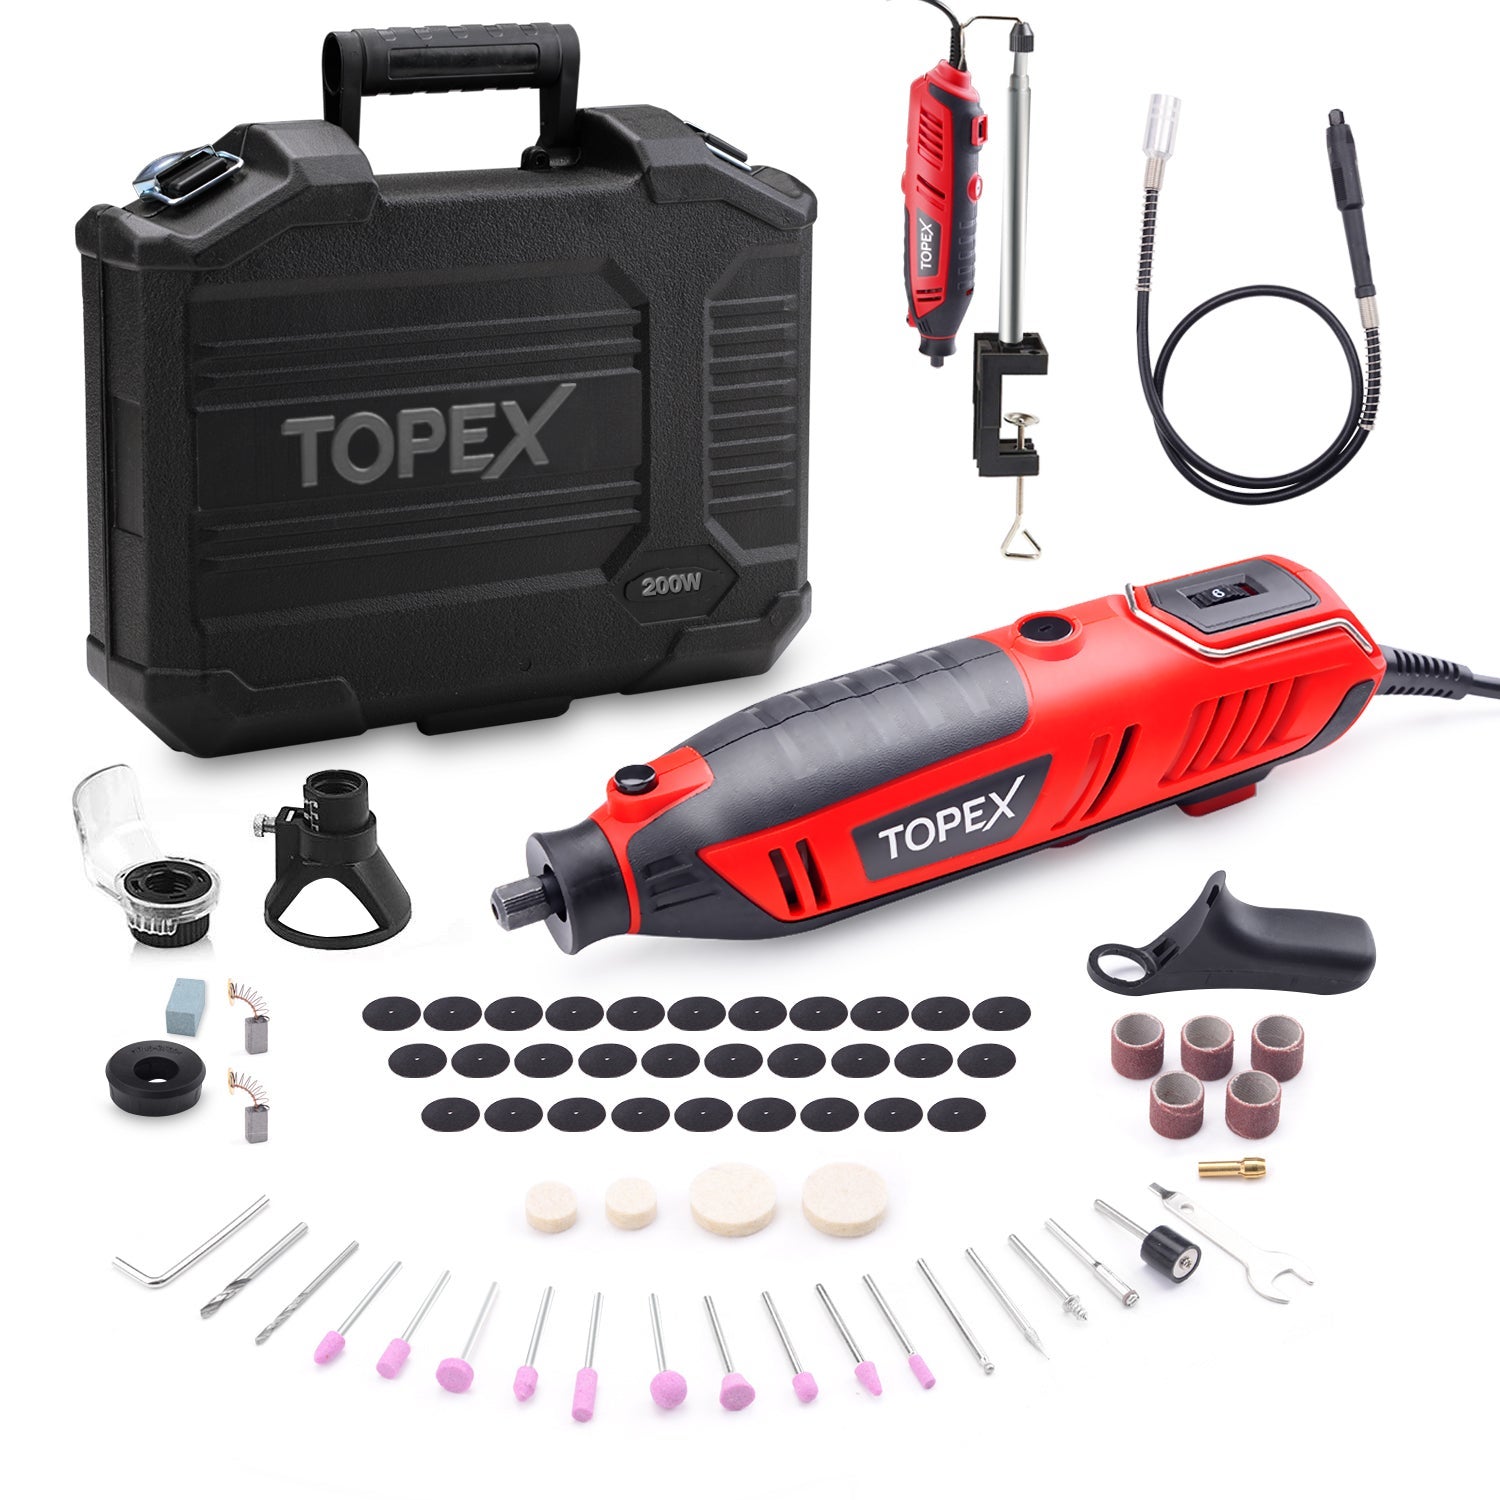 TOPEX Heavy Duty 200W Rotary Tool Set Grinder Sander Polisher Flex Shaft Multi Acces.